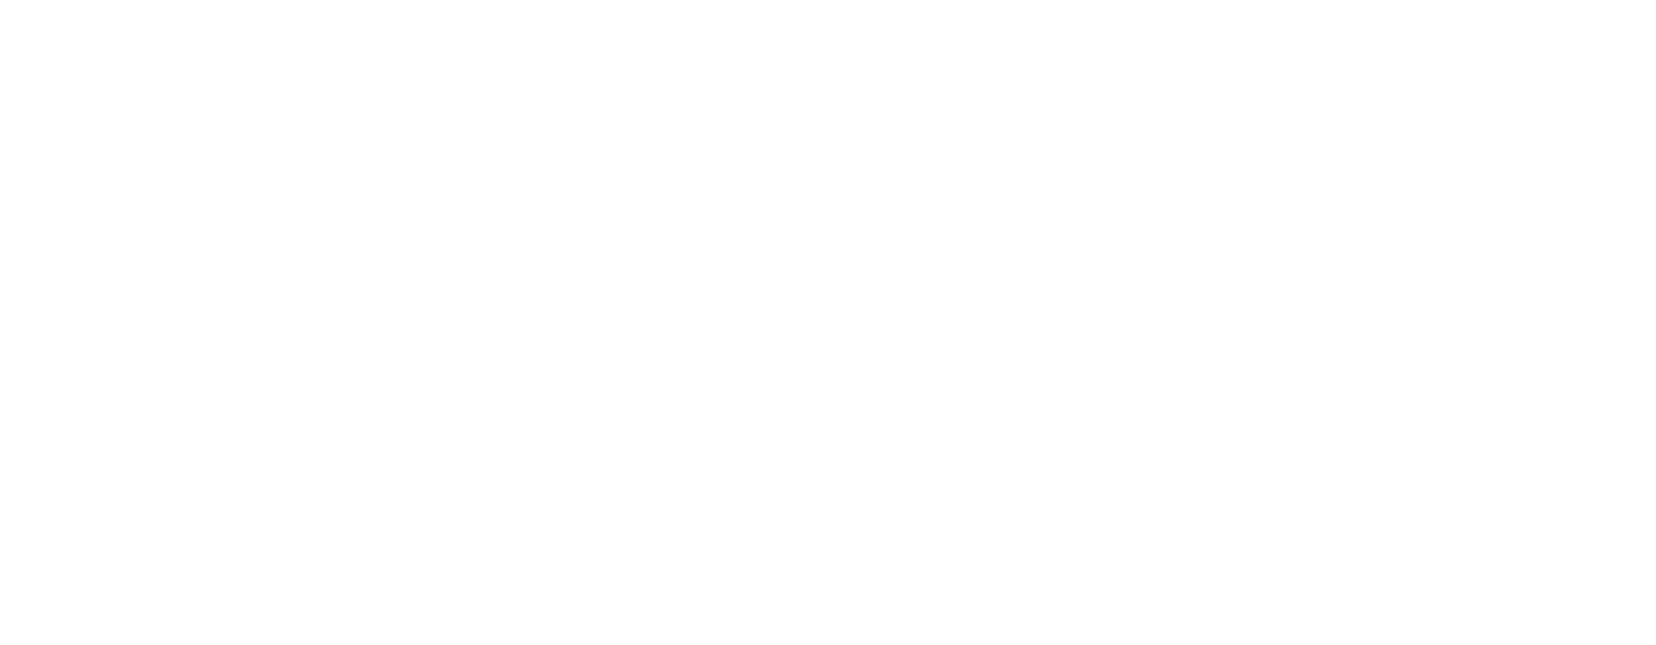 missouri rayus radiology logo